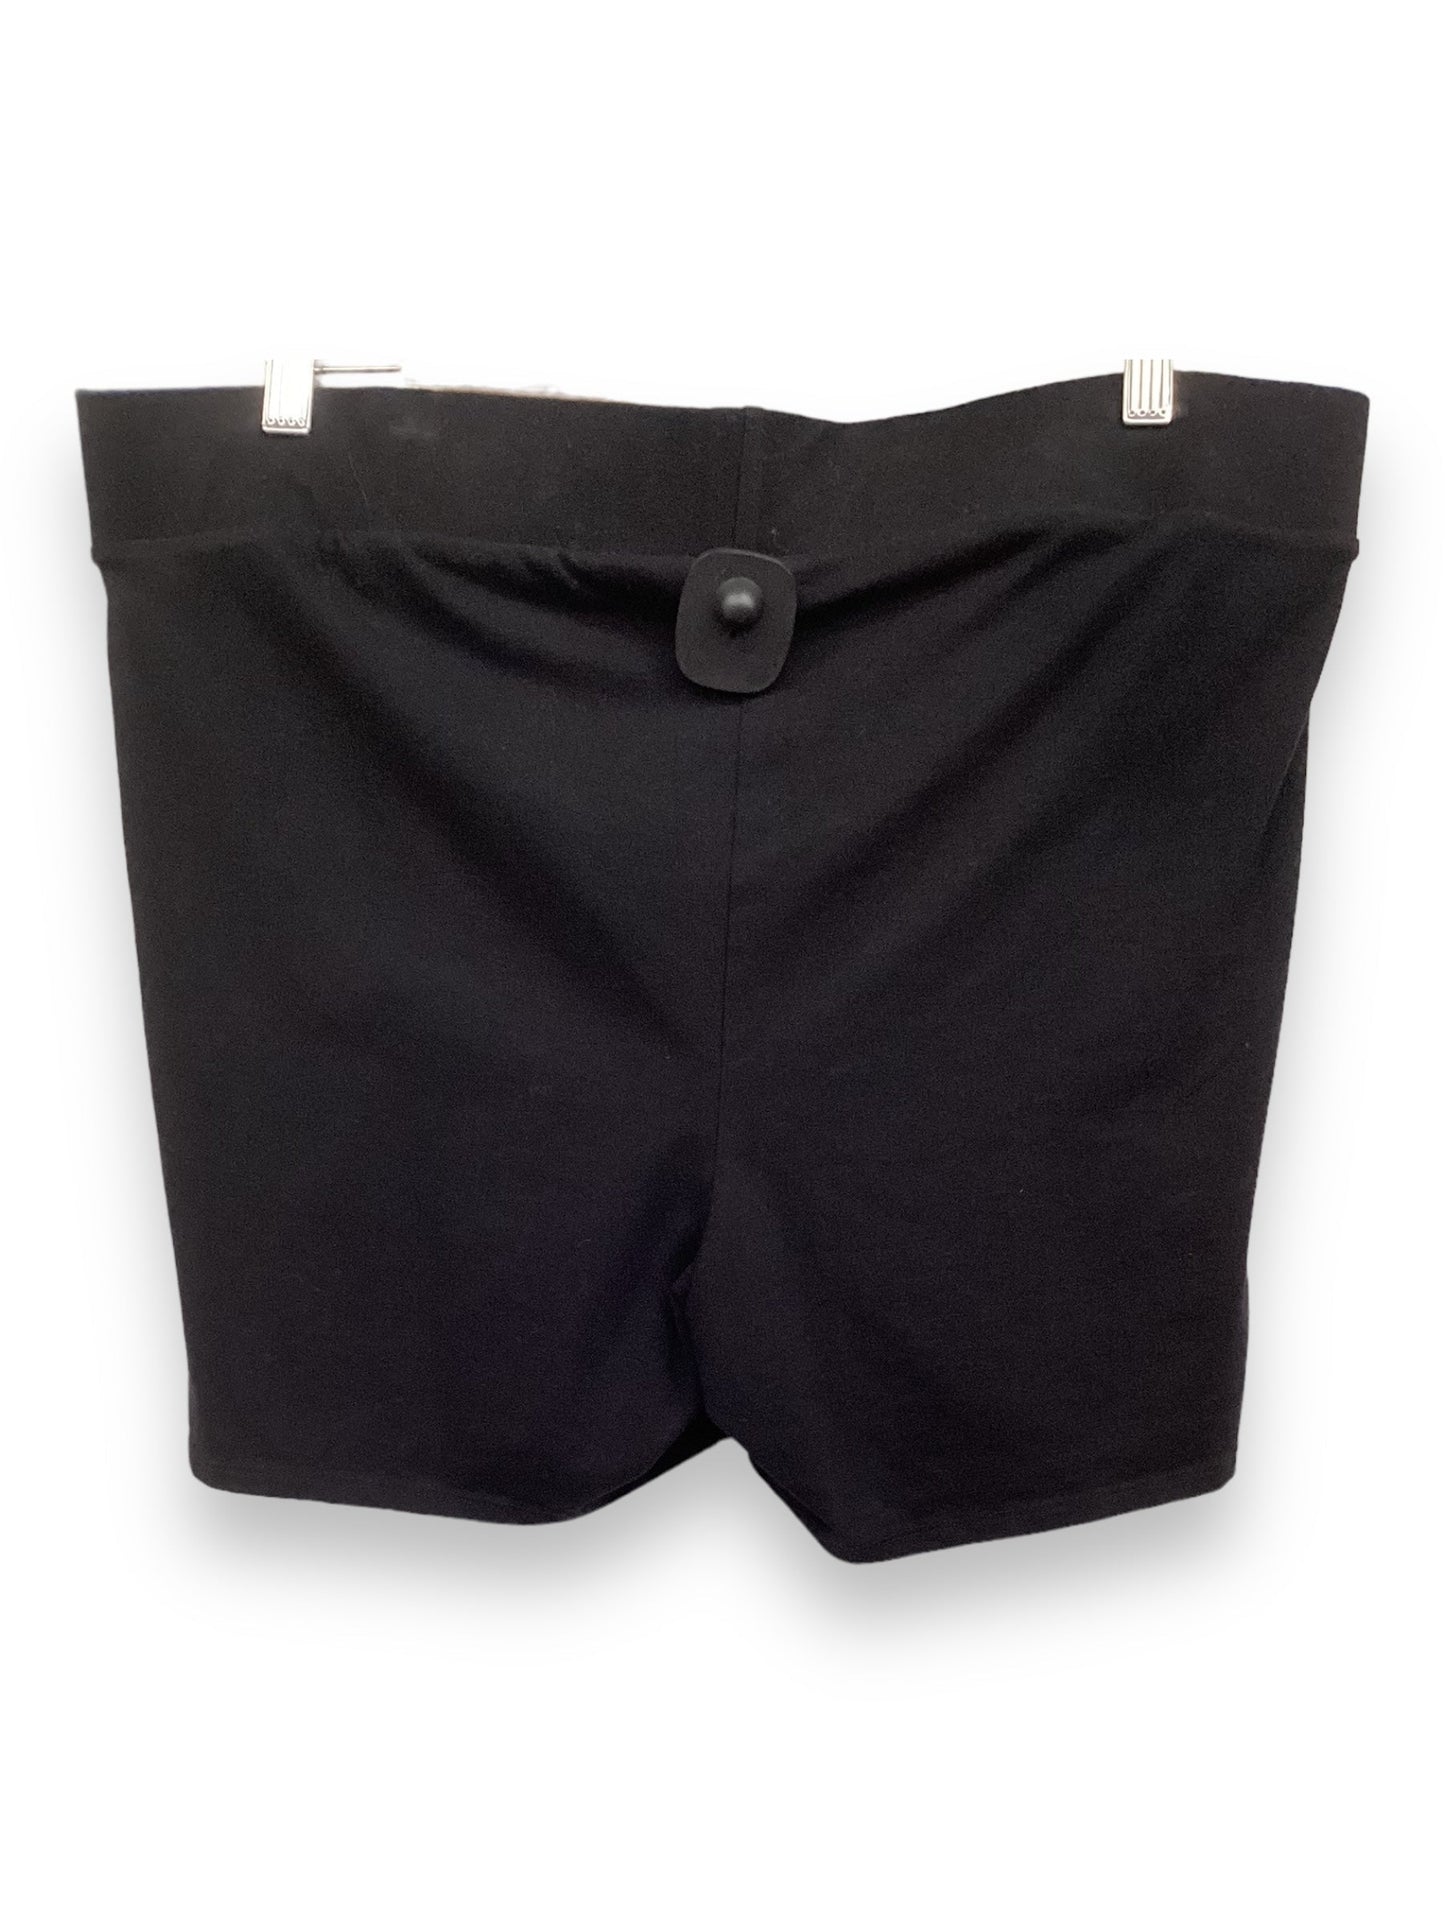 Black Shorts Torrid, Size 3x